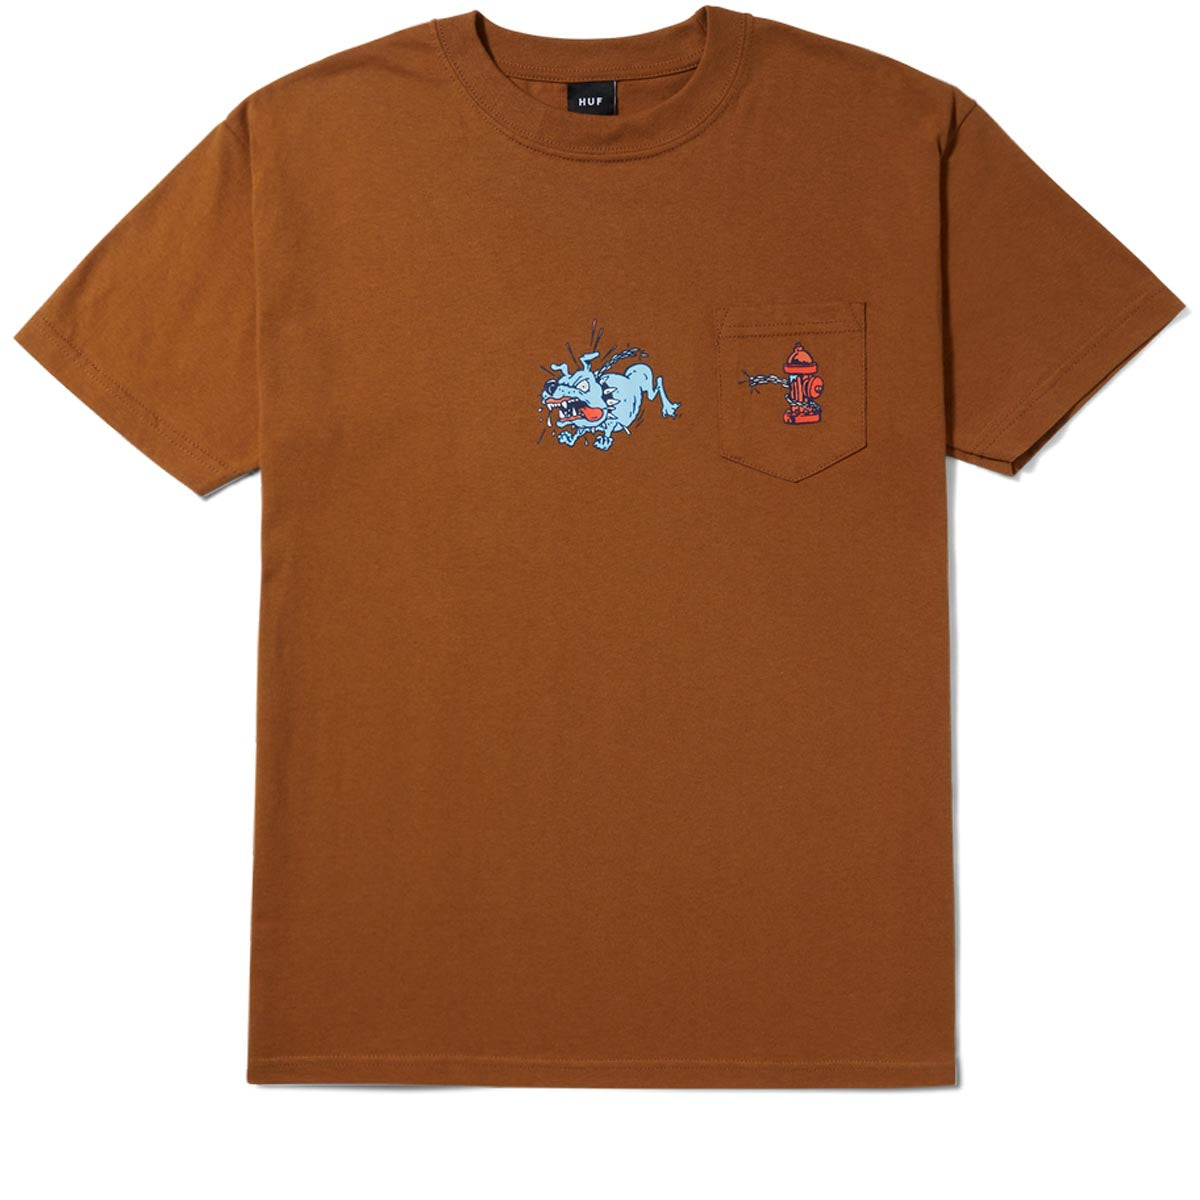 HUF Junkyard Dog Pocket T-Shirt - Rubber image 1